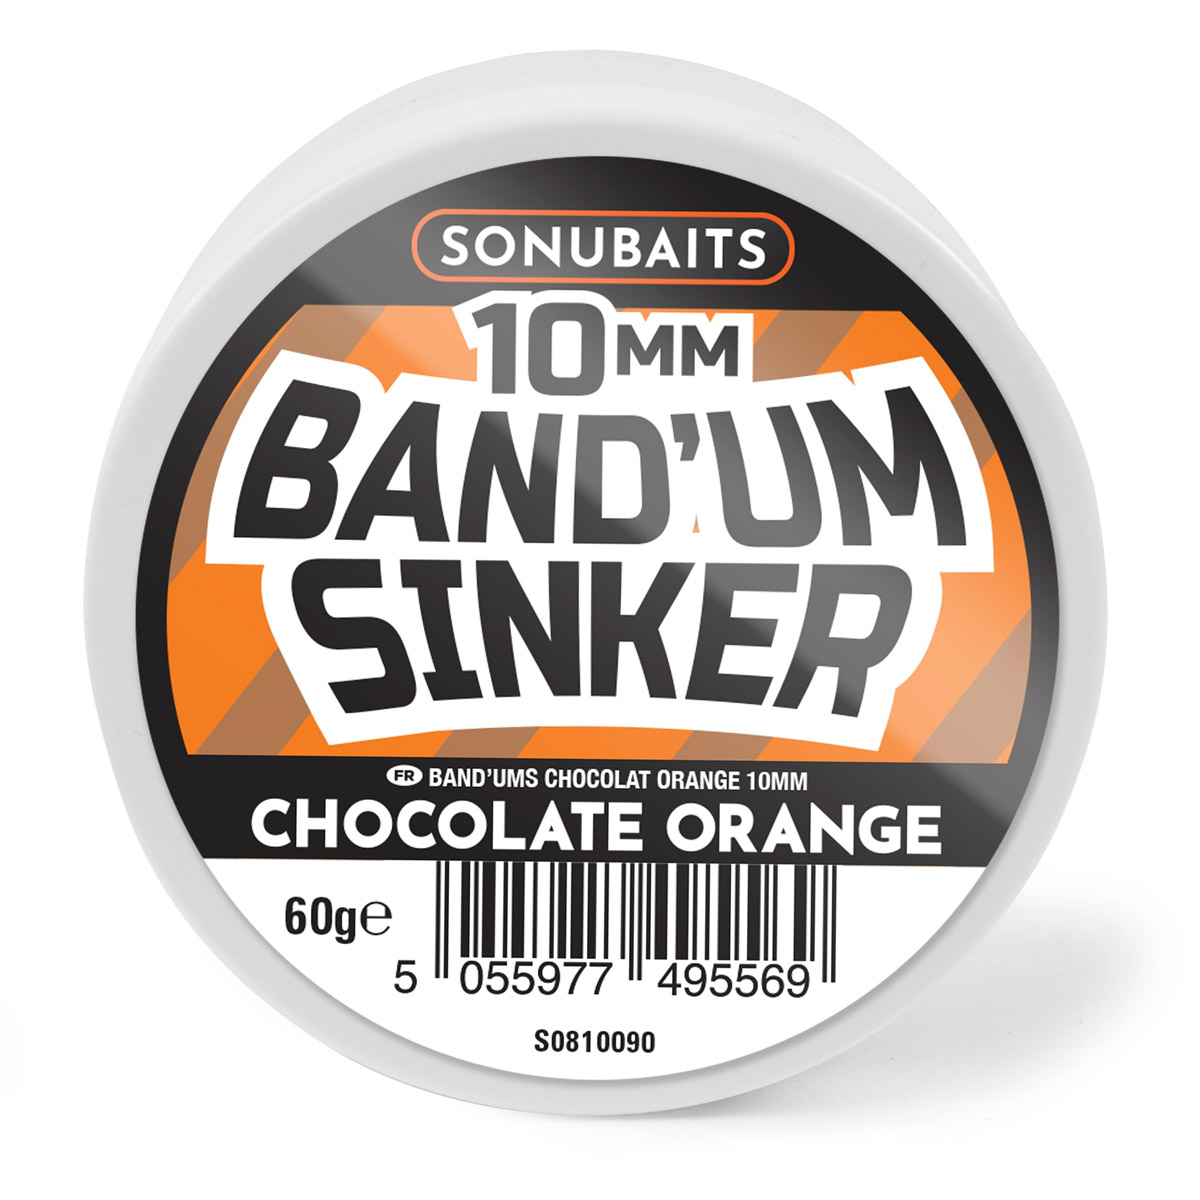 Sonubaits Band'um Sinker Chocolate Orange -  10 mm